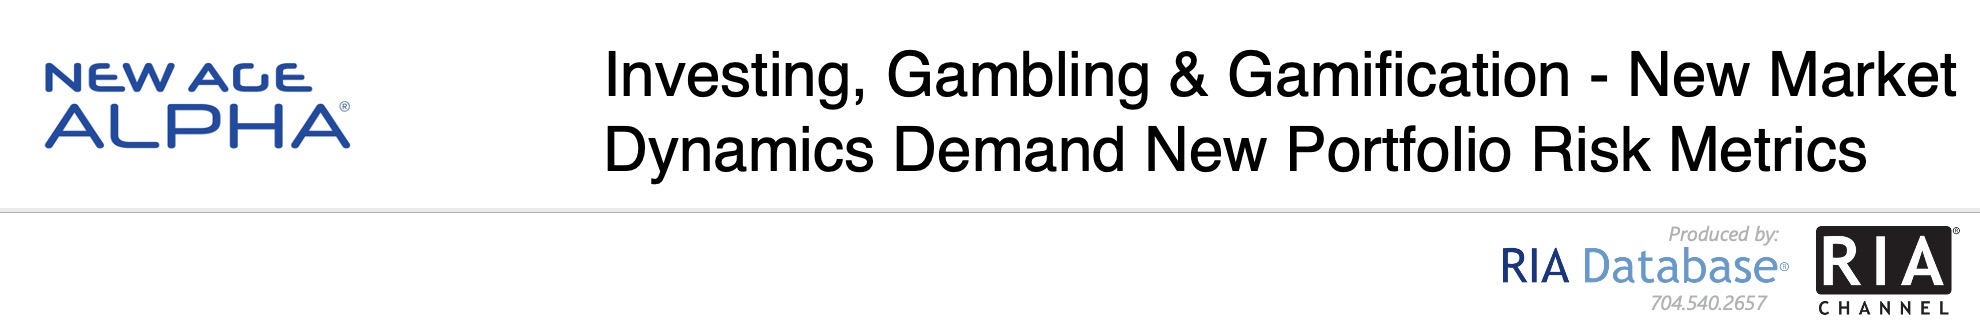 Investing, Gambling & Gamification - New Market Dynamics Demand New Portfolio Risk Metrics